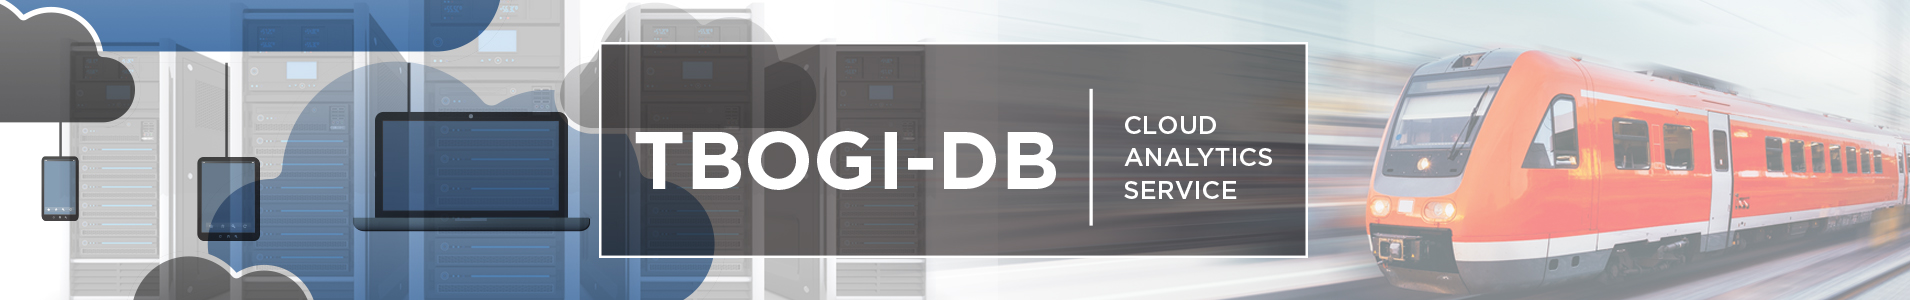 TBOGI DB Cloud Analytics Service